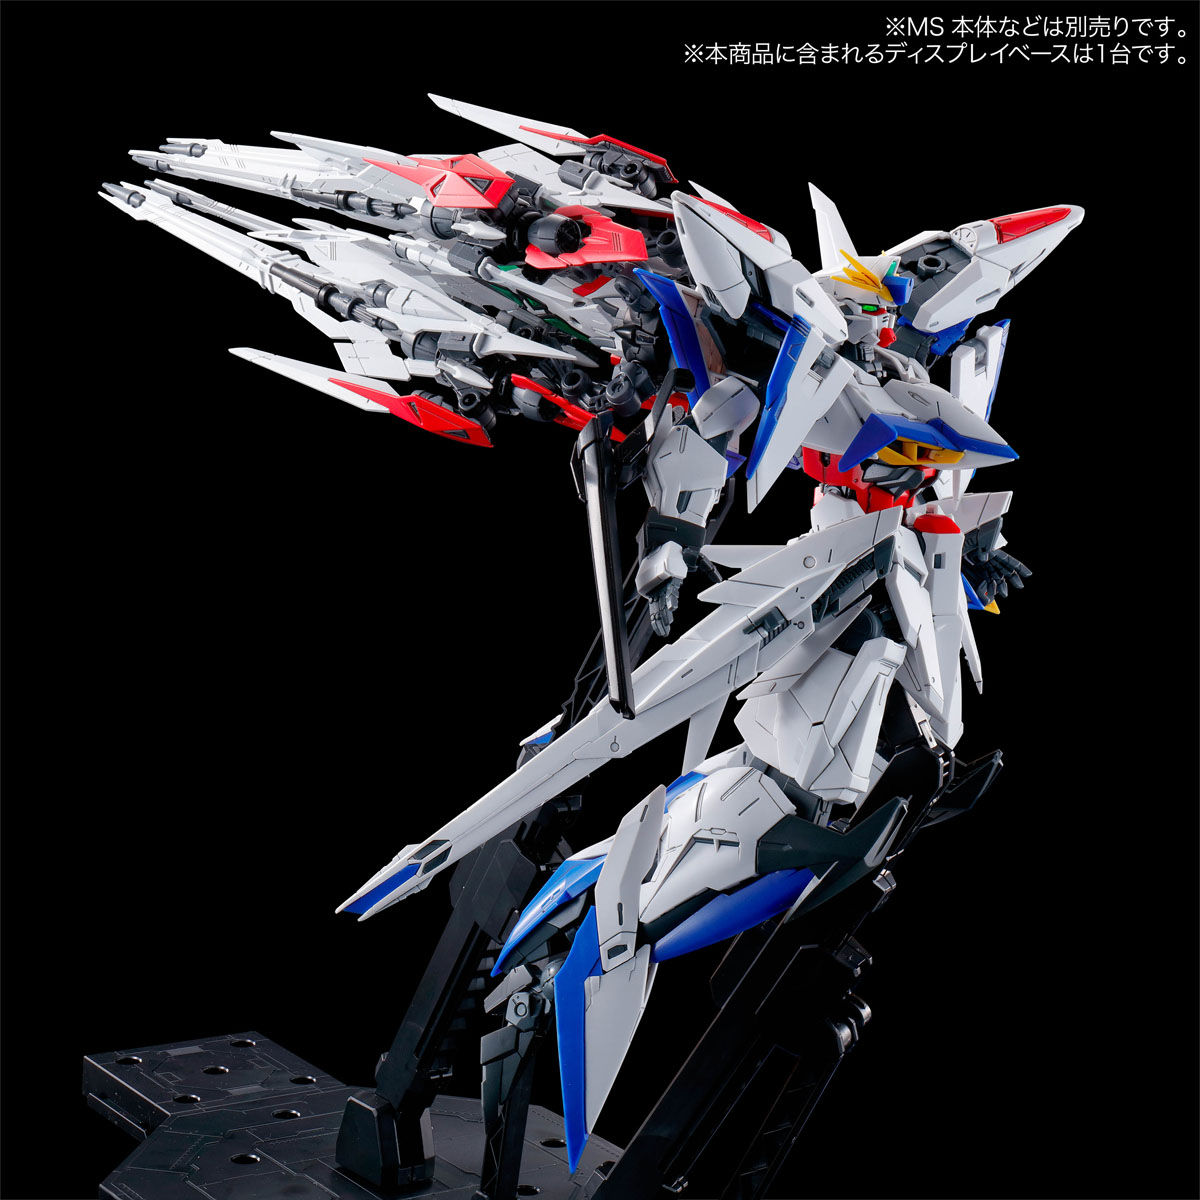 MG 1/100 EW452HM Maneuver Striker for MVF-X08 Eclipse Gundam